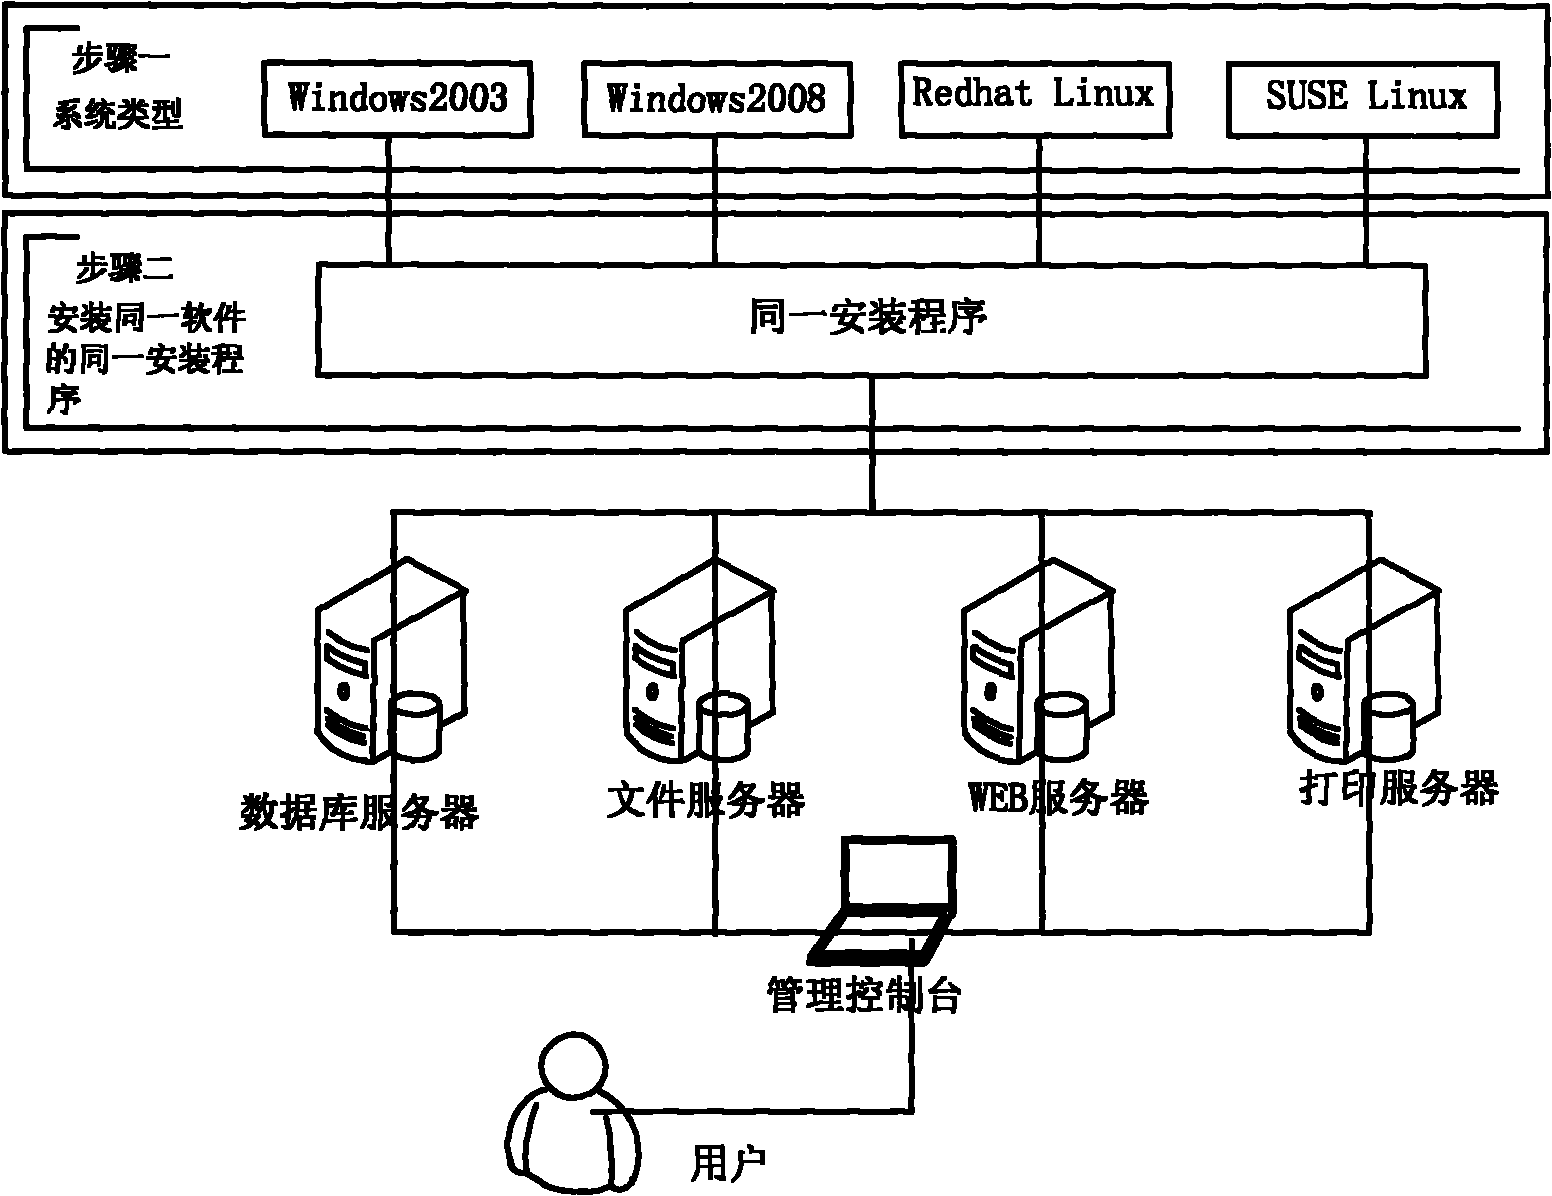 Method for making general installation program of cross-operating system platform